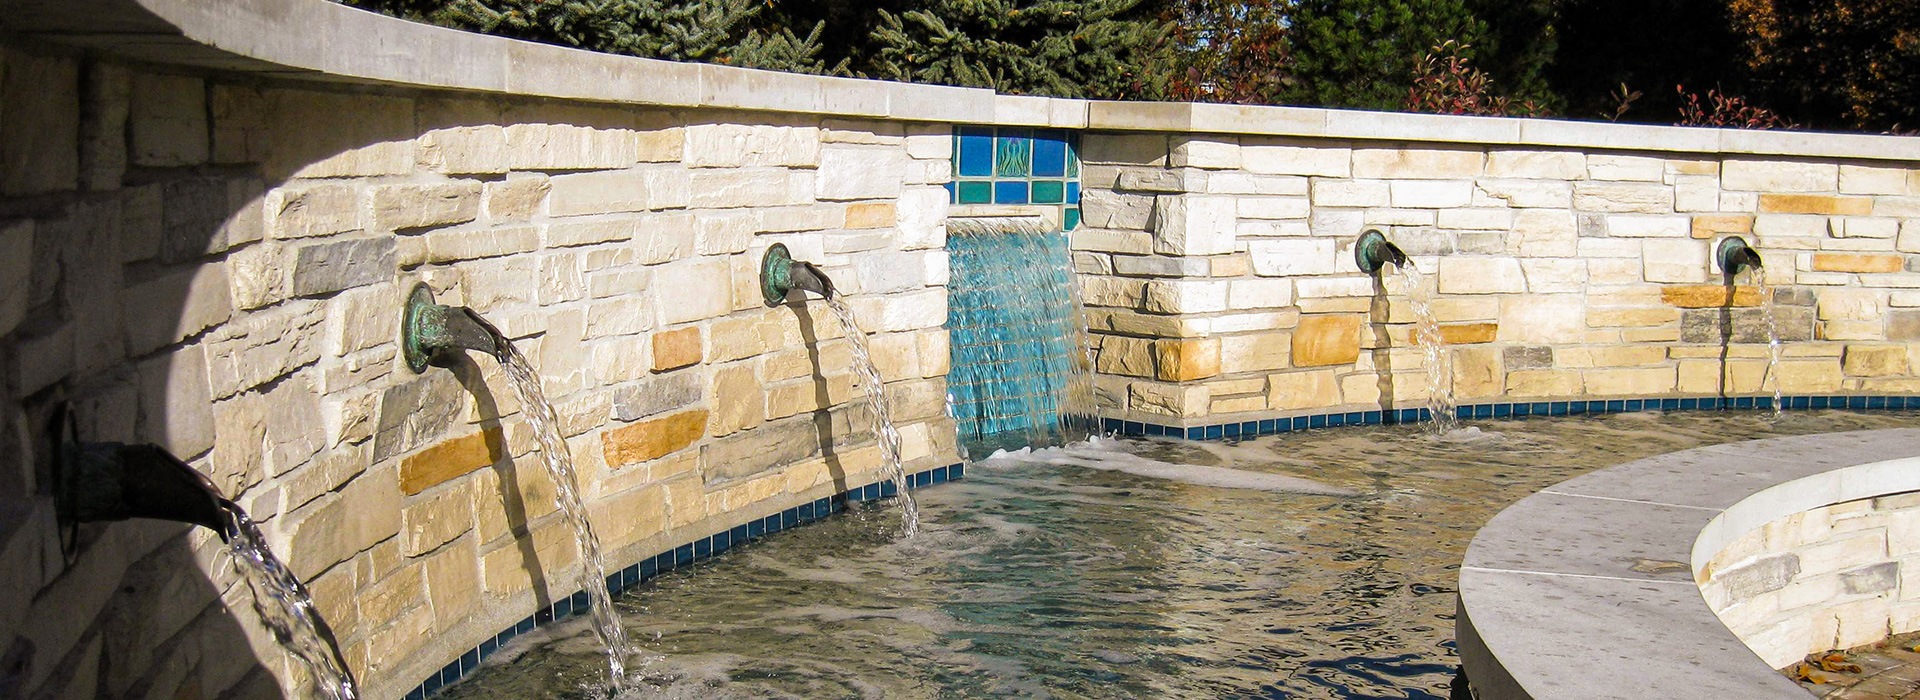 Water Feature at McLaren Garden of Healing and Renewal